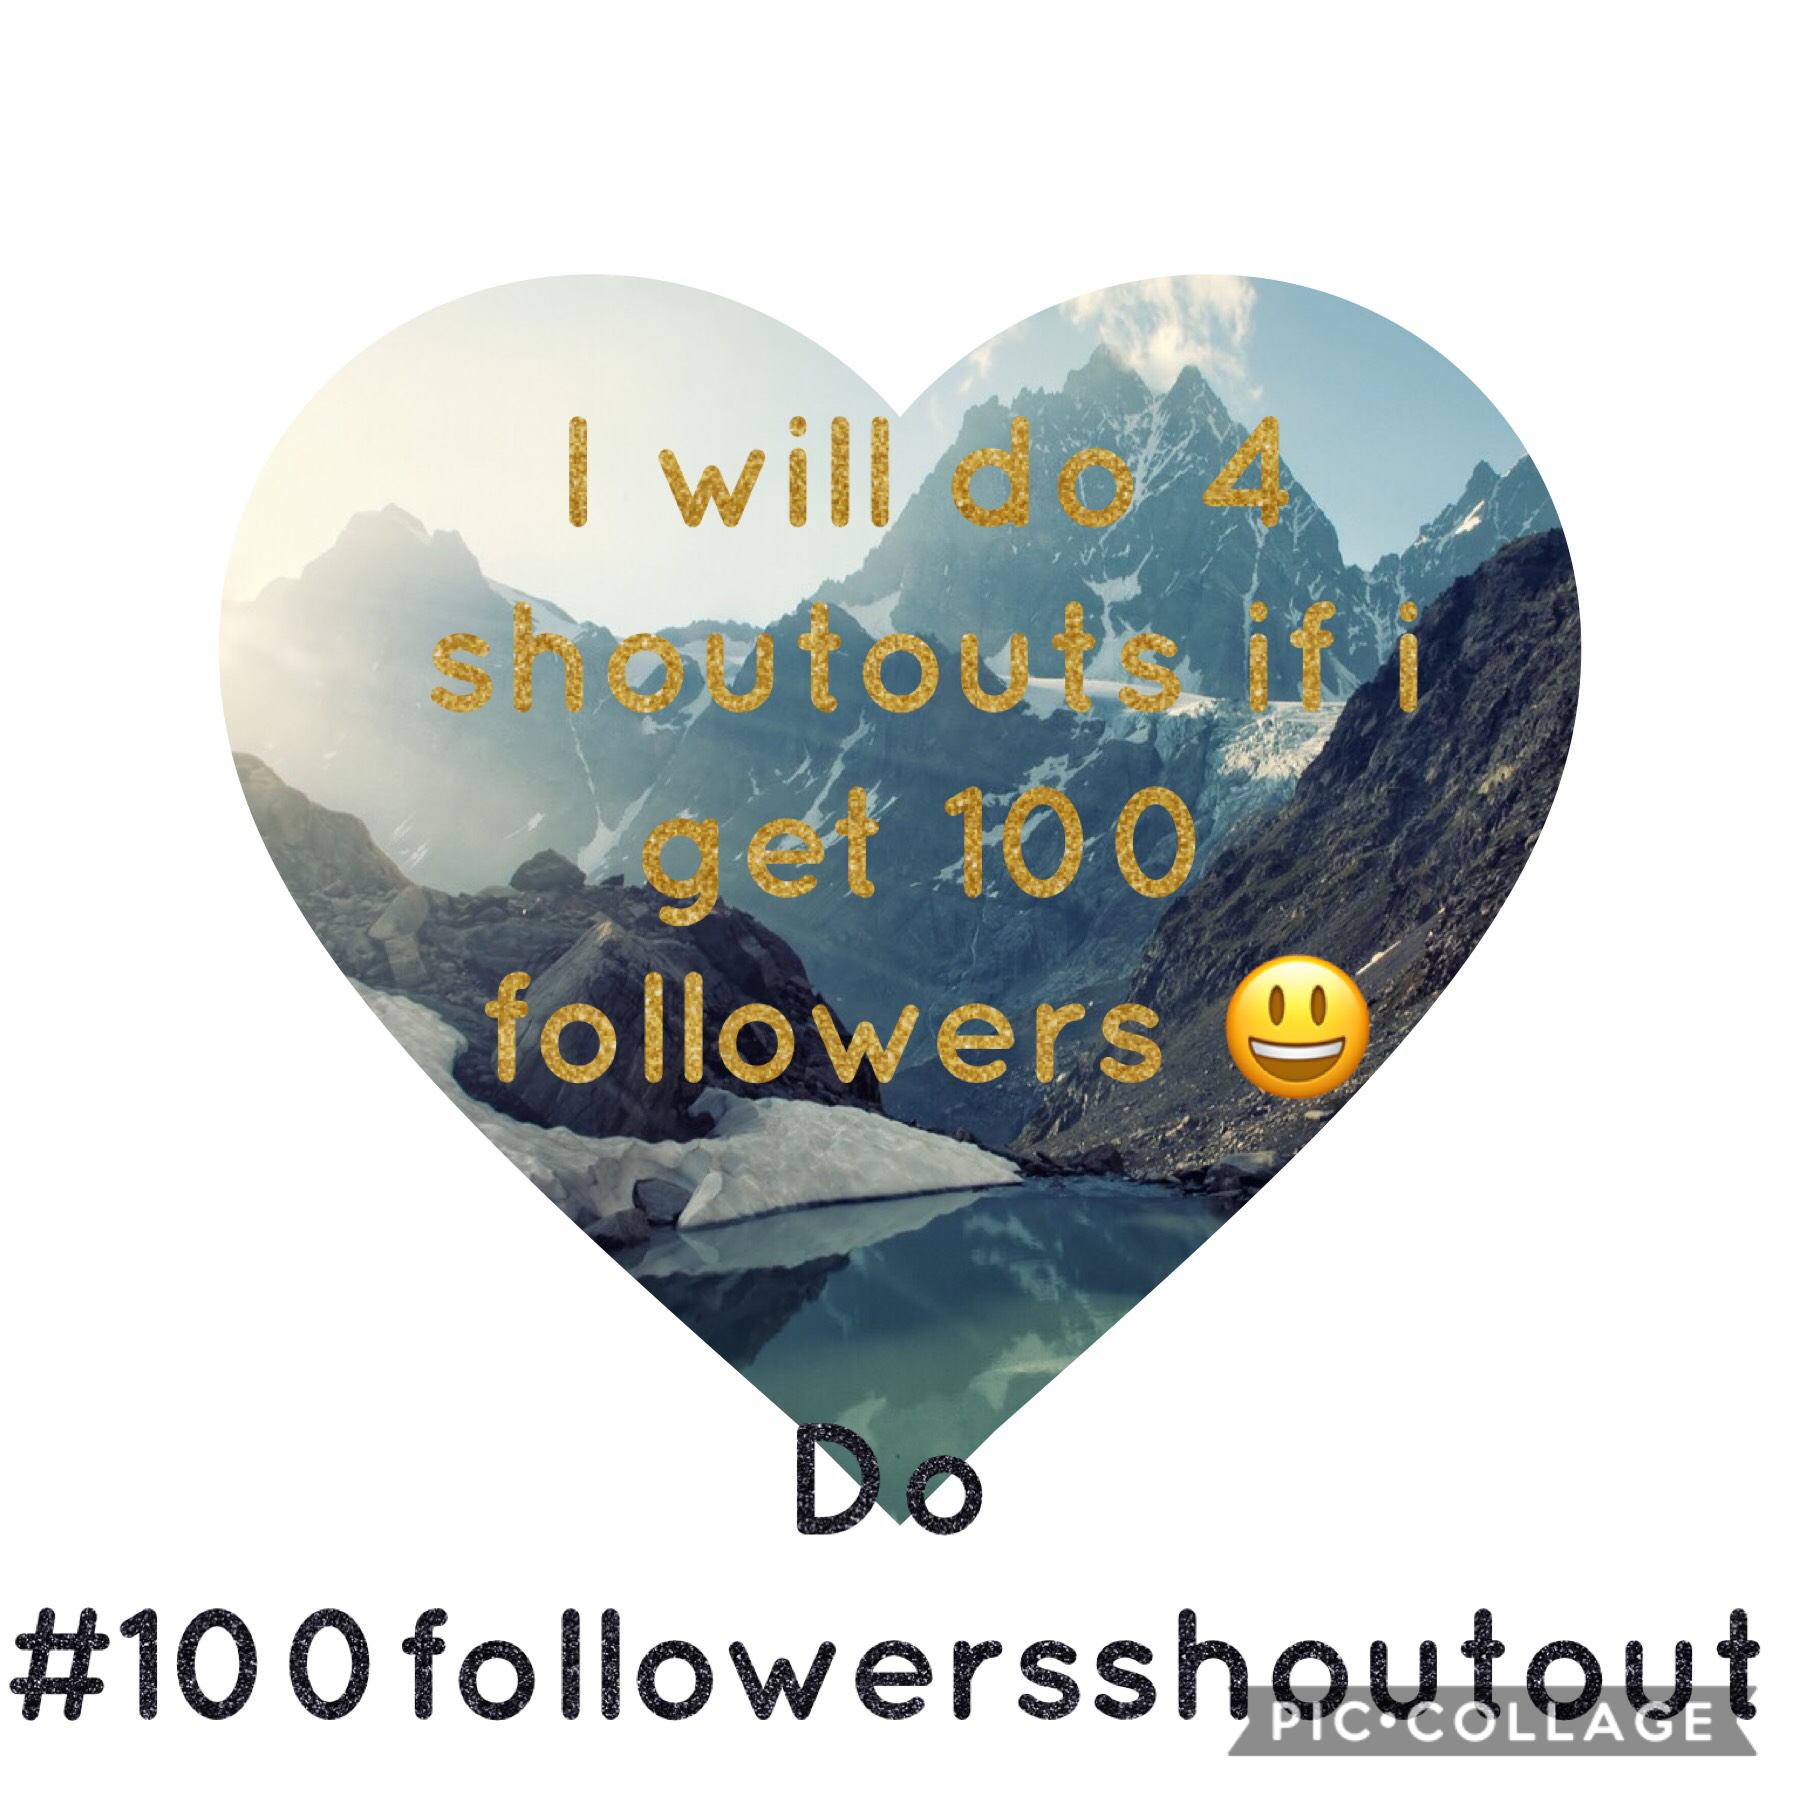 I will do 4 shoutouts if I get 100 followers #100followersshoutout